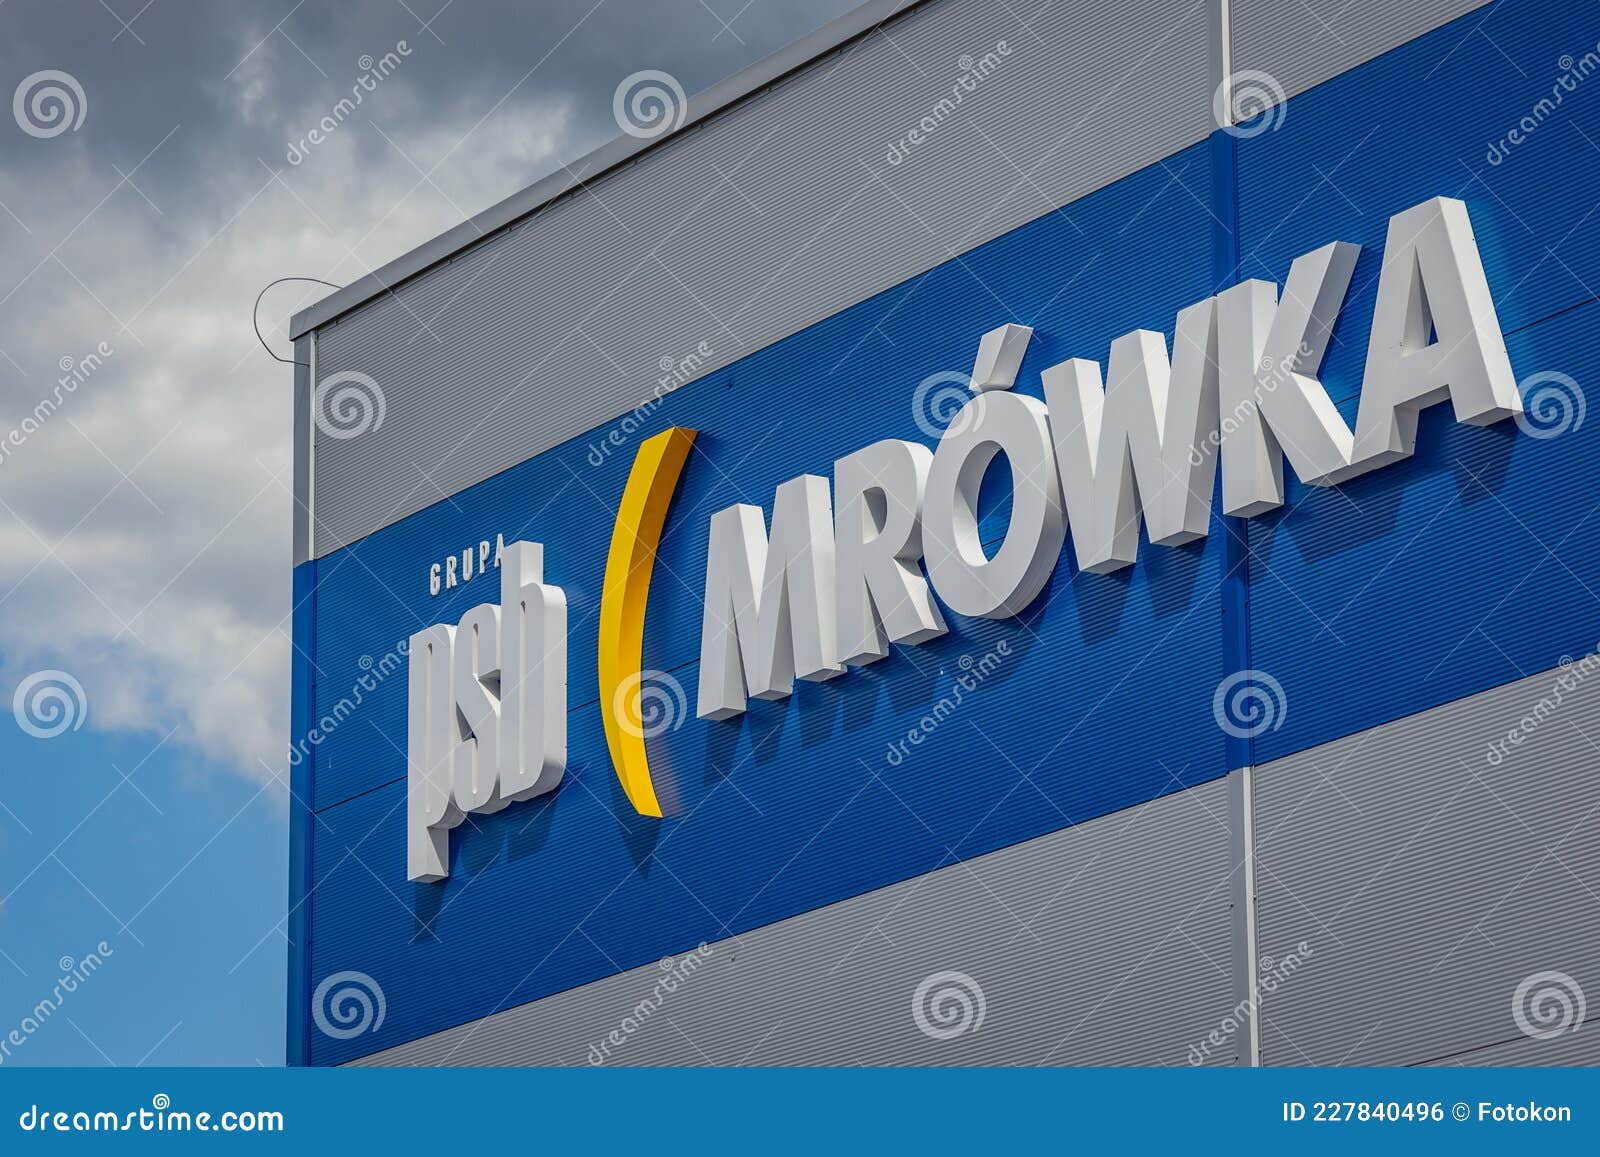 Mrowka Stock Photos - Free & Royalty-Free Stock Photos from Dreamstime